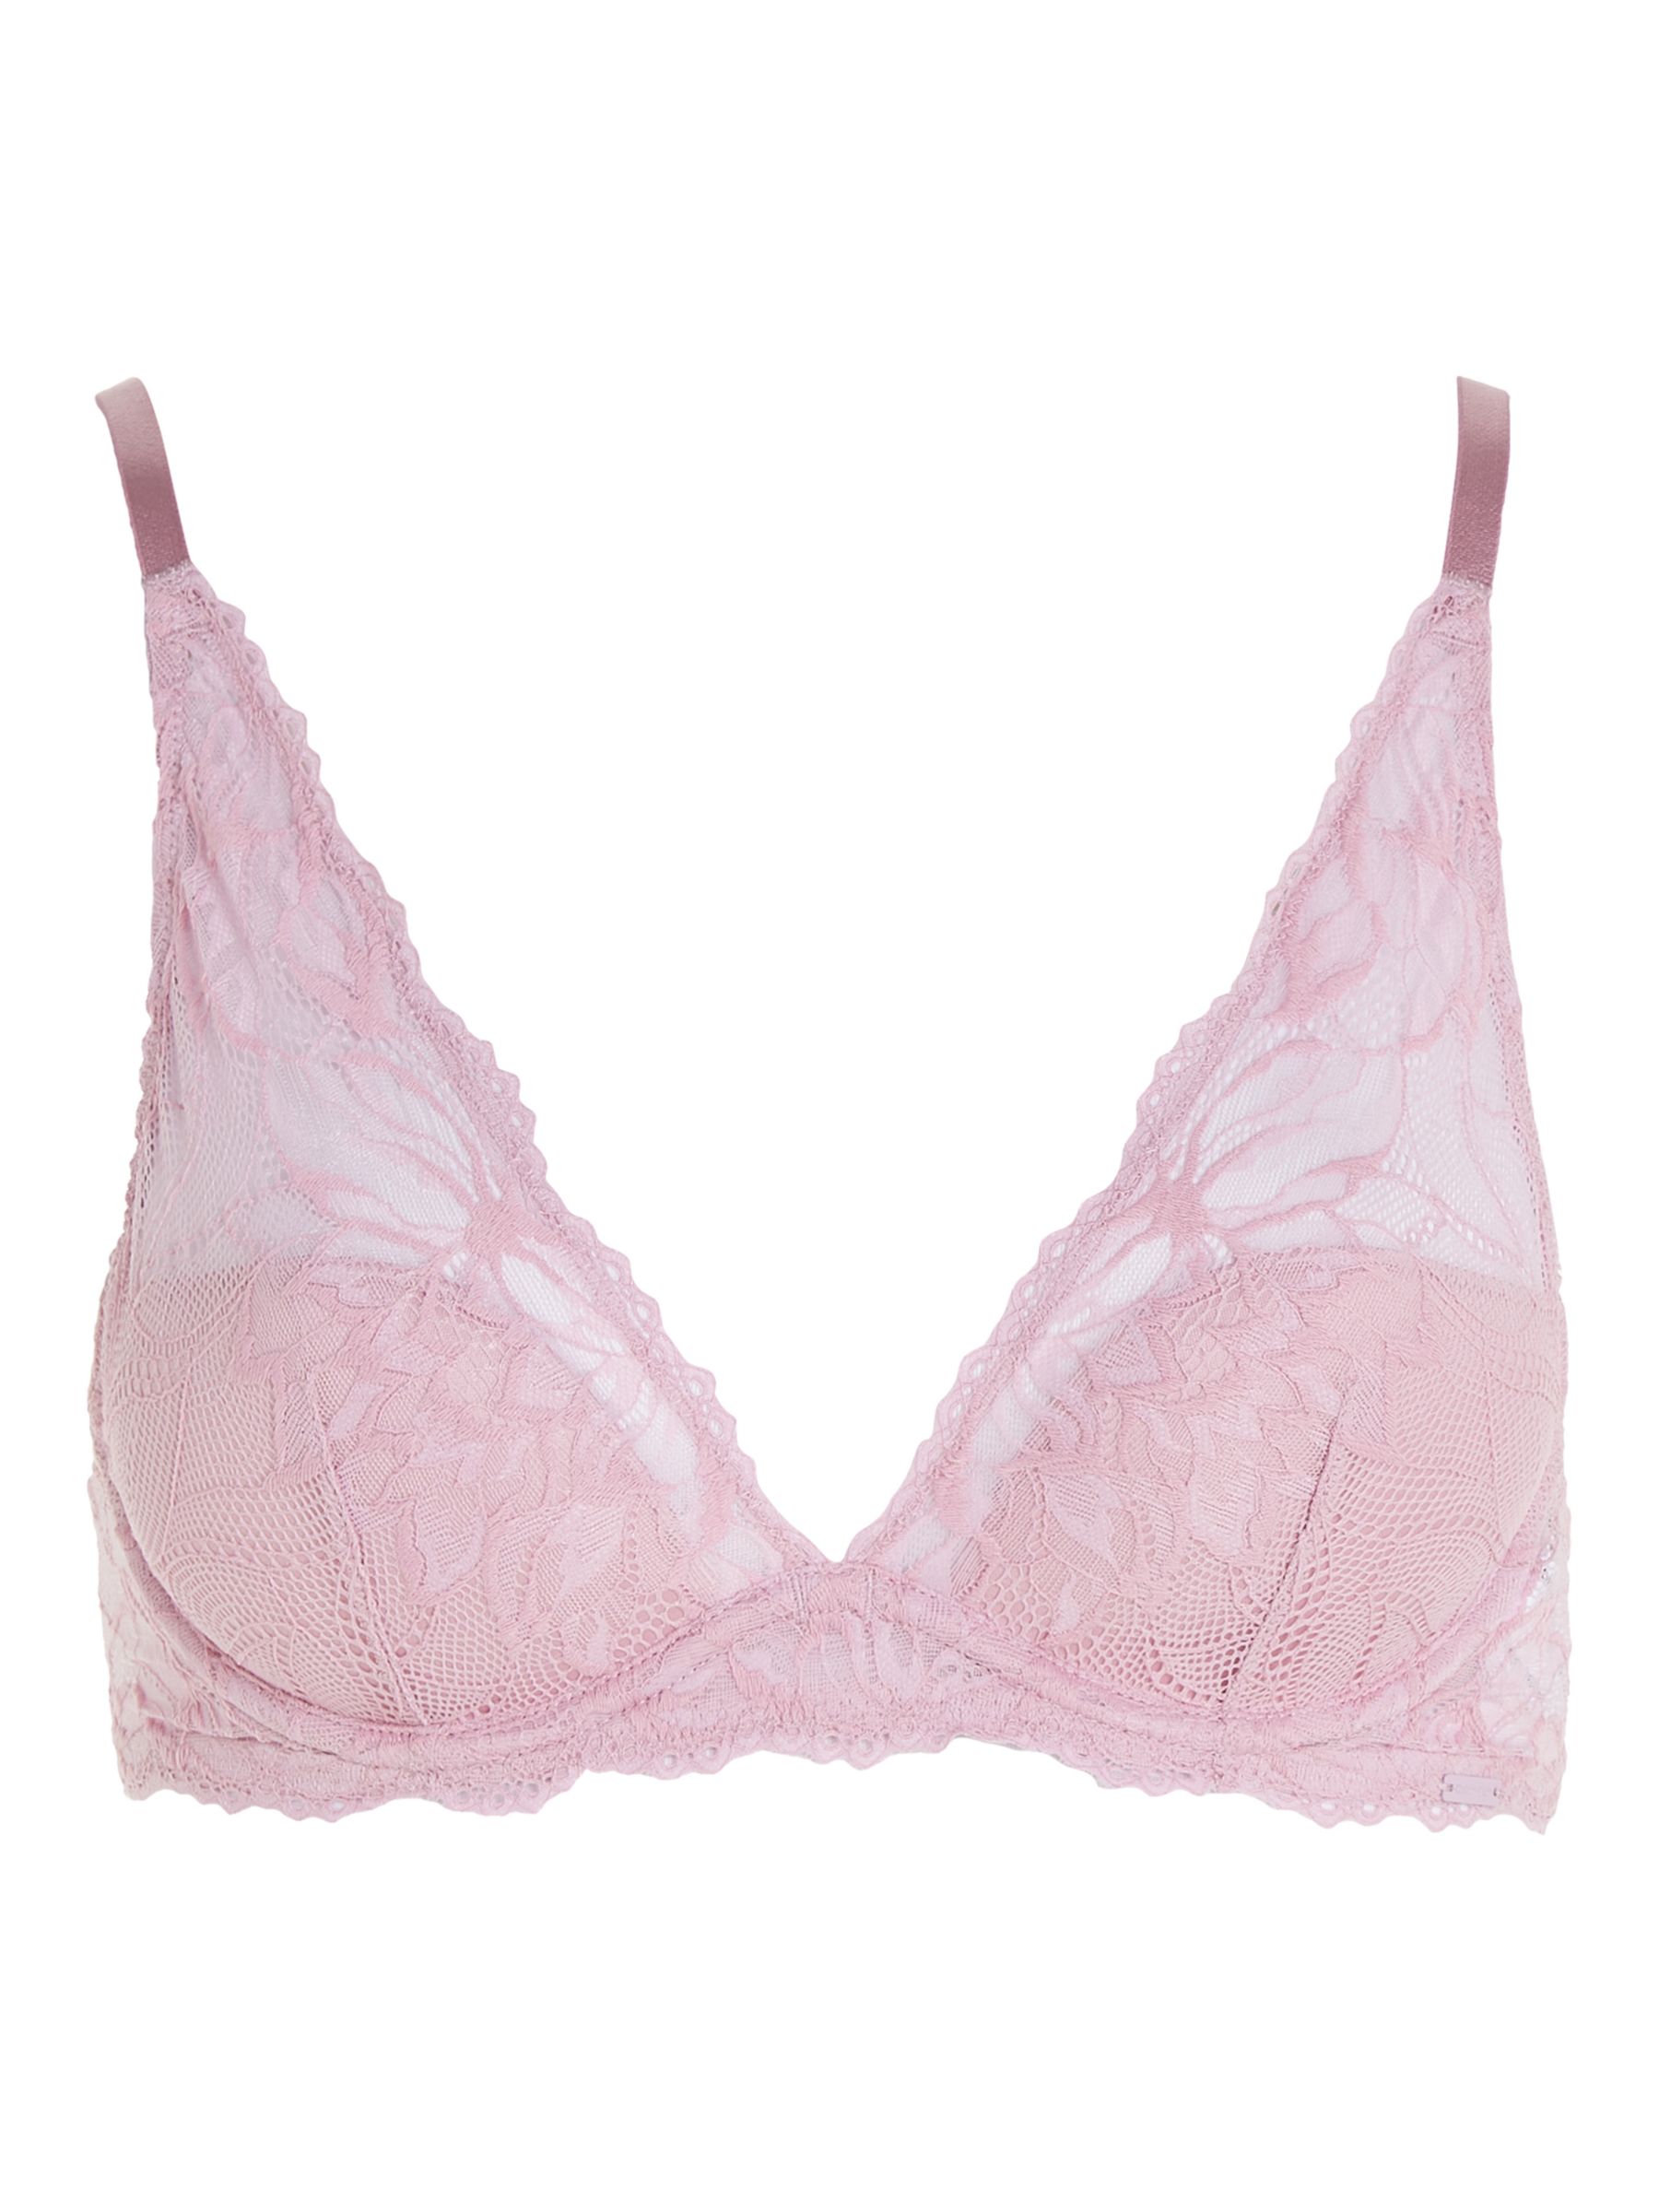 Calvin Klein Underwear BRALETTE 2 PACK - Bustier - tearose mauve/powder  sky/pink - Zalando.de